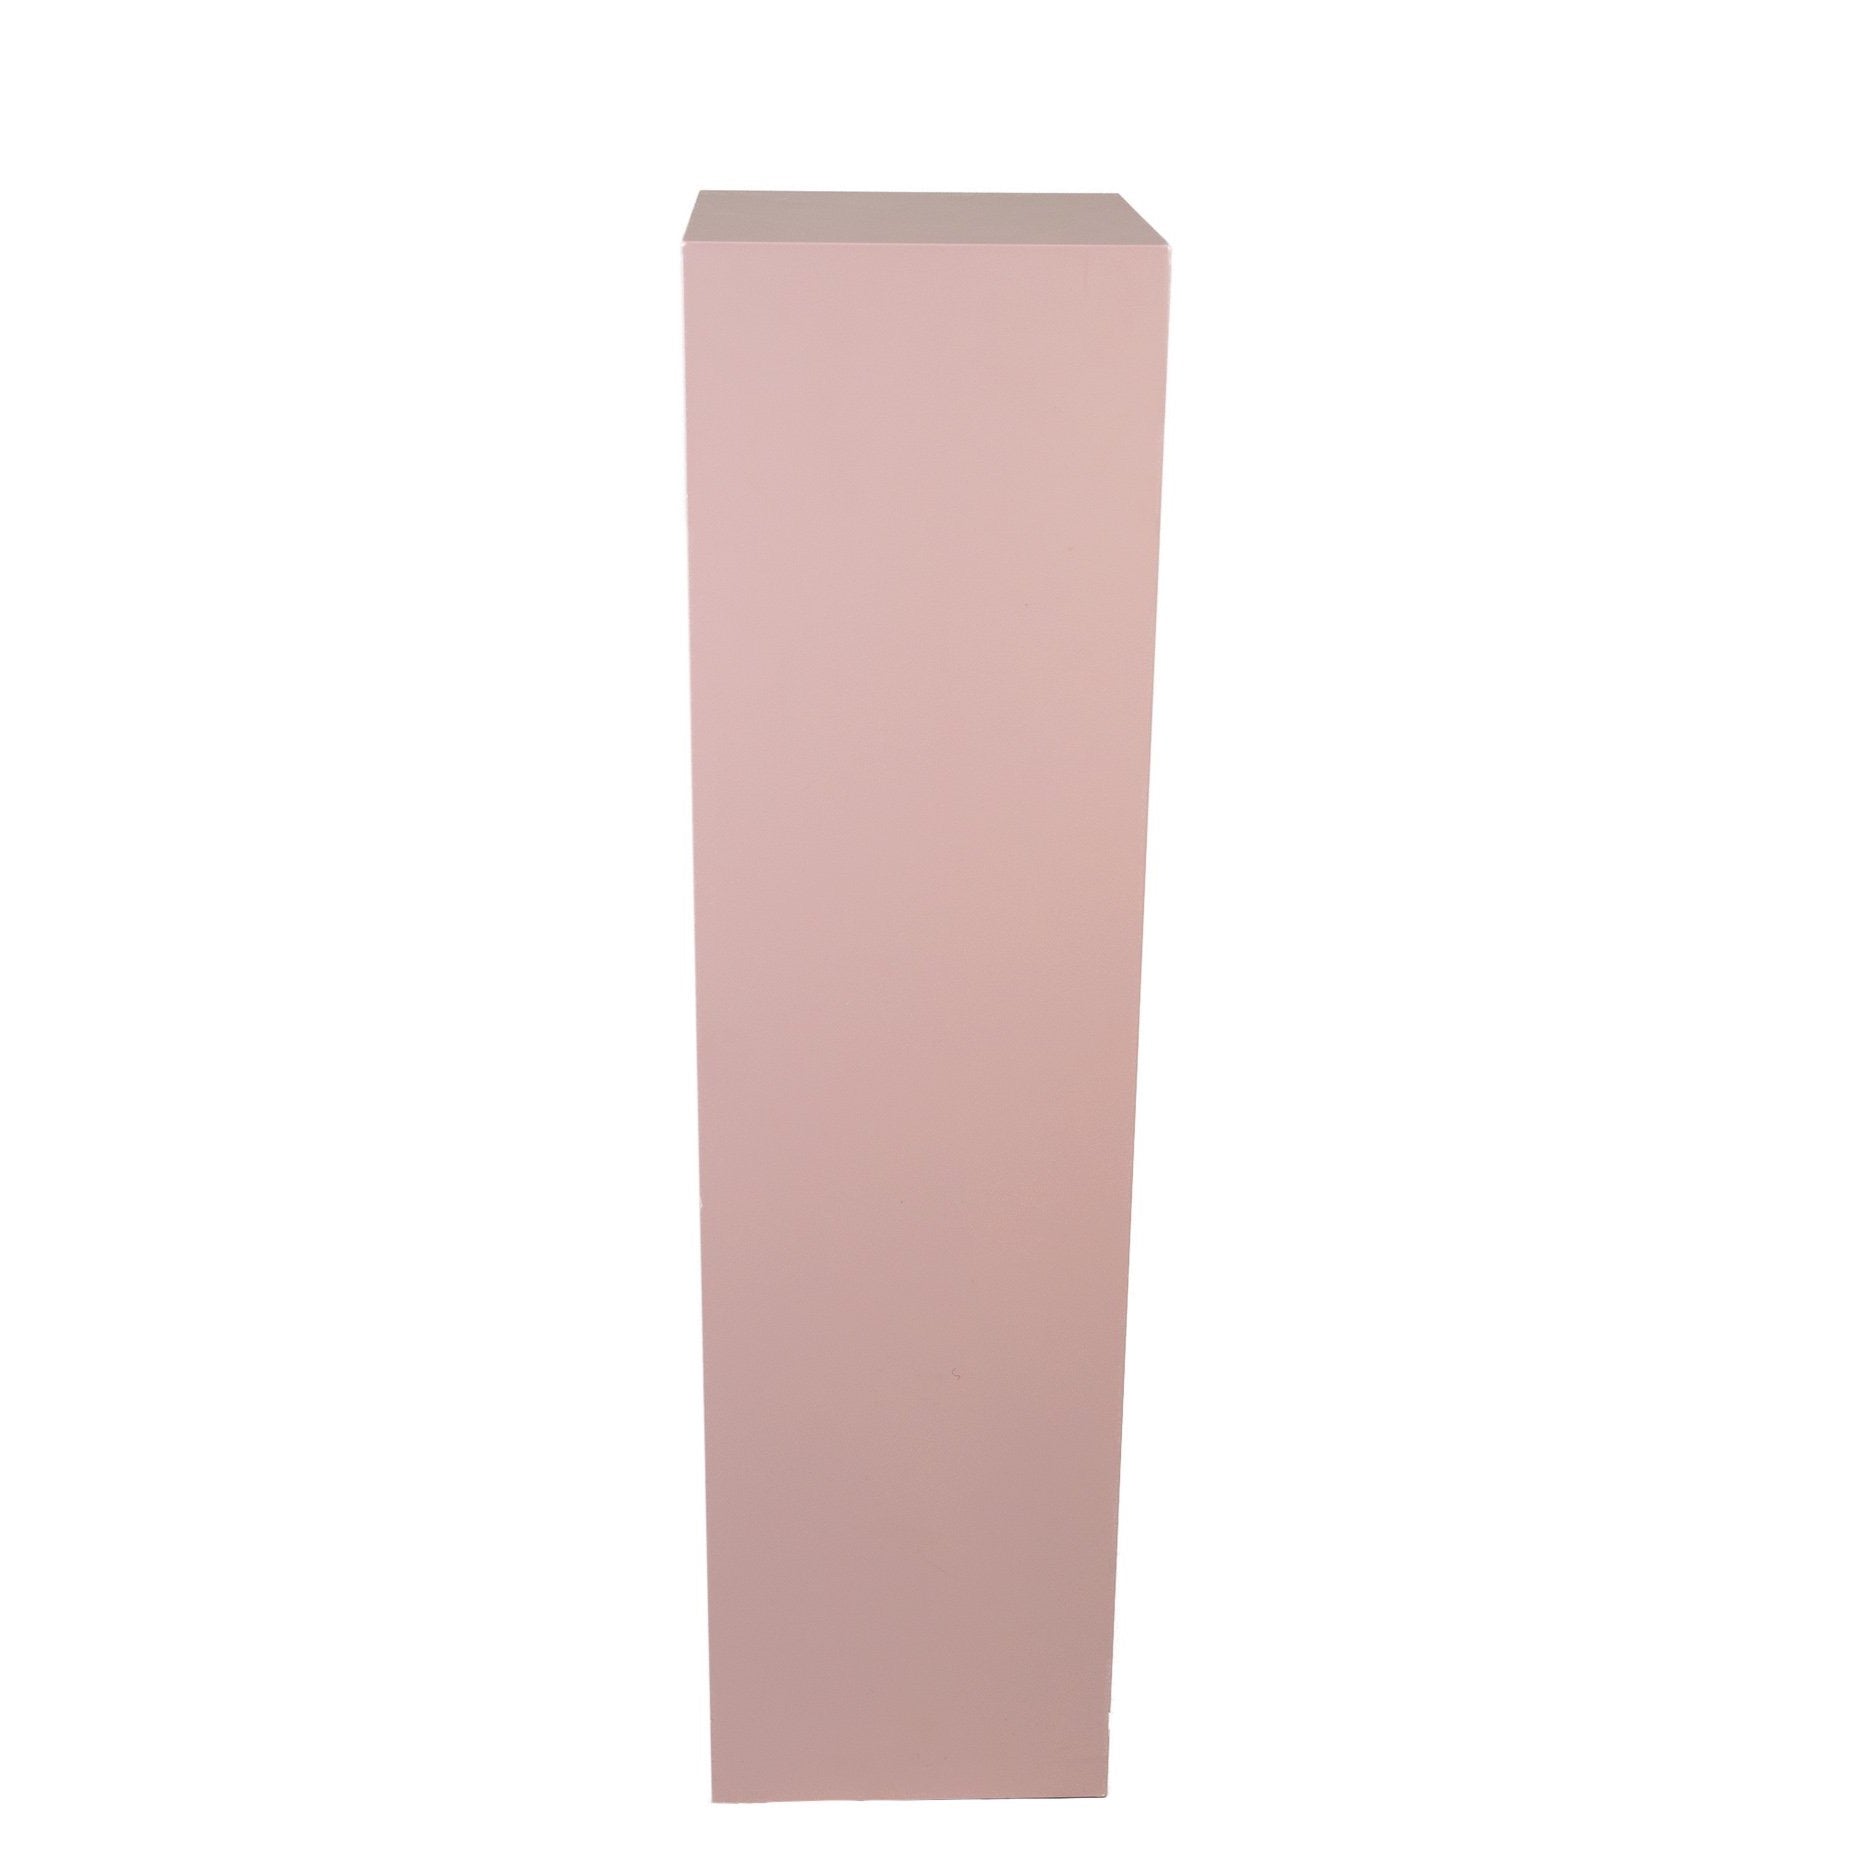 Sokkel zacht roze 30x30x130cm